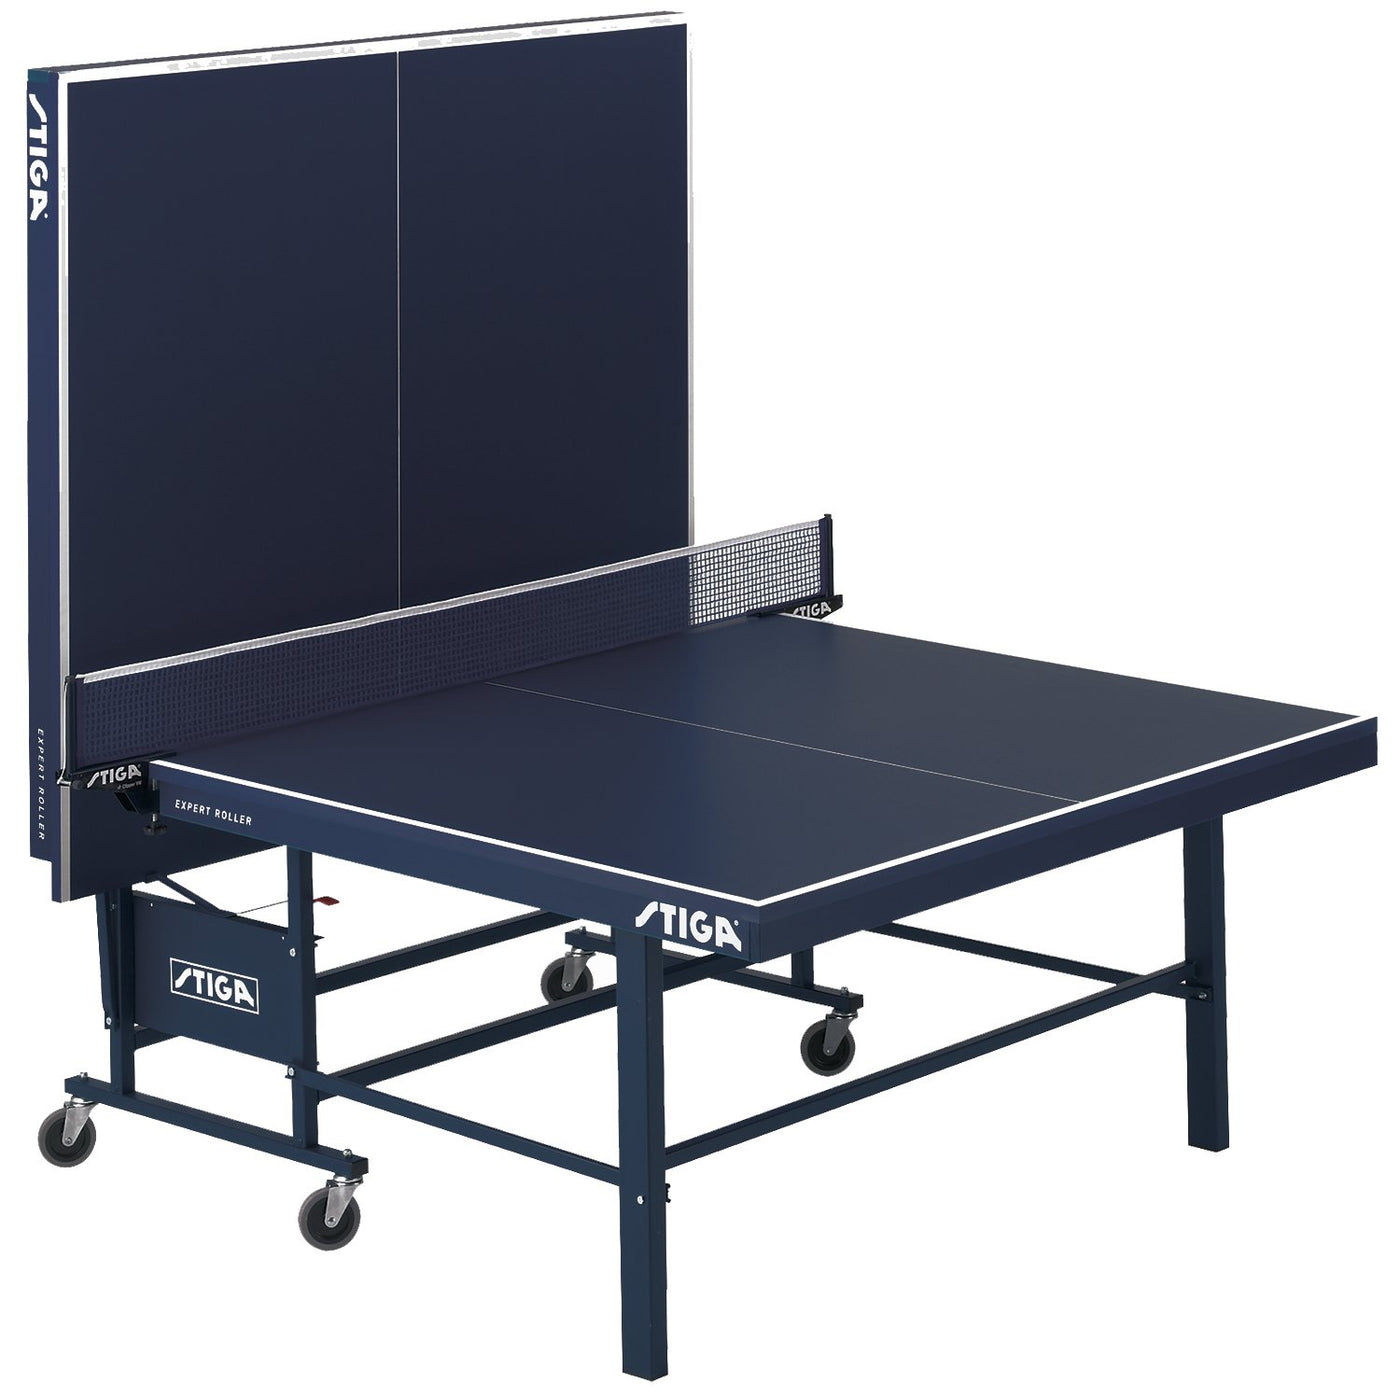 Mini Table Tennis Game 24x12